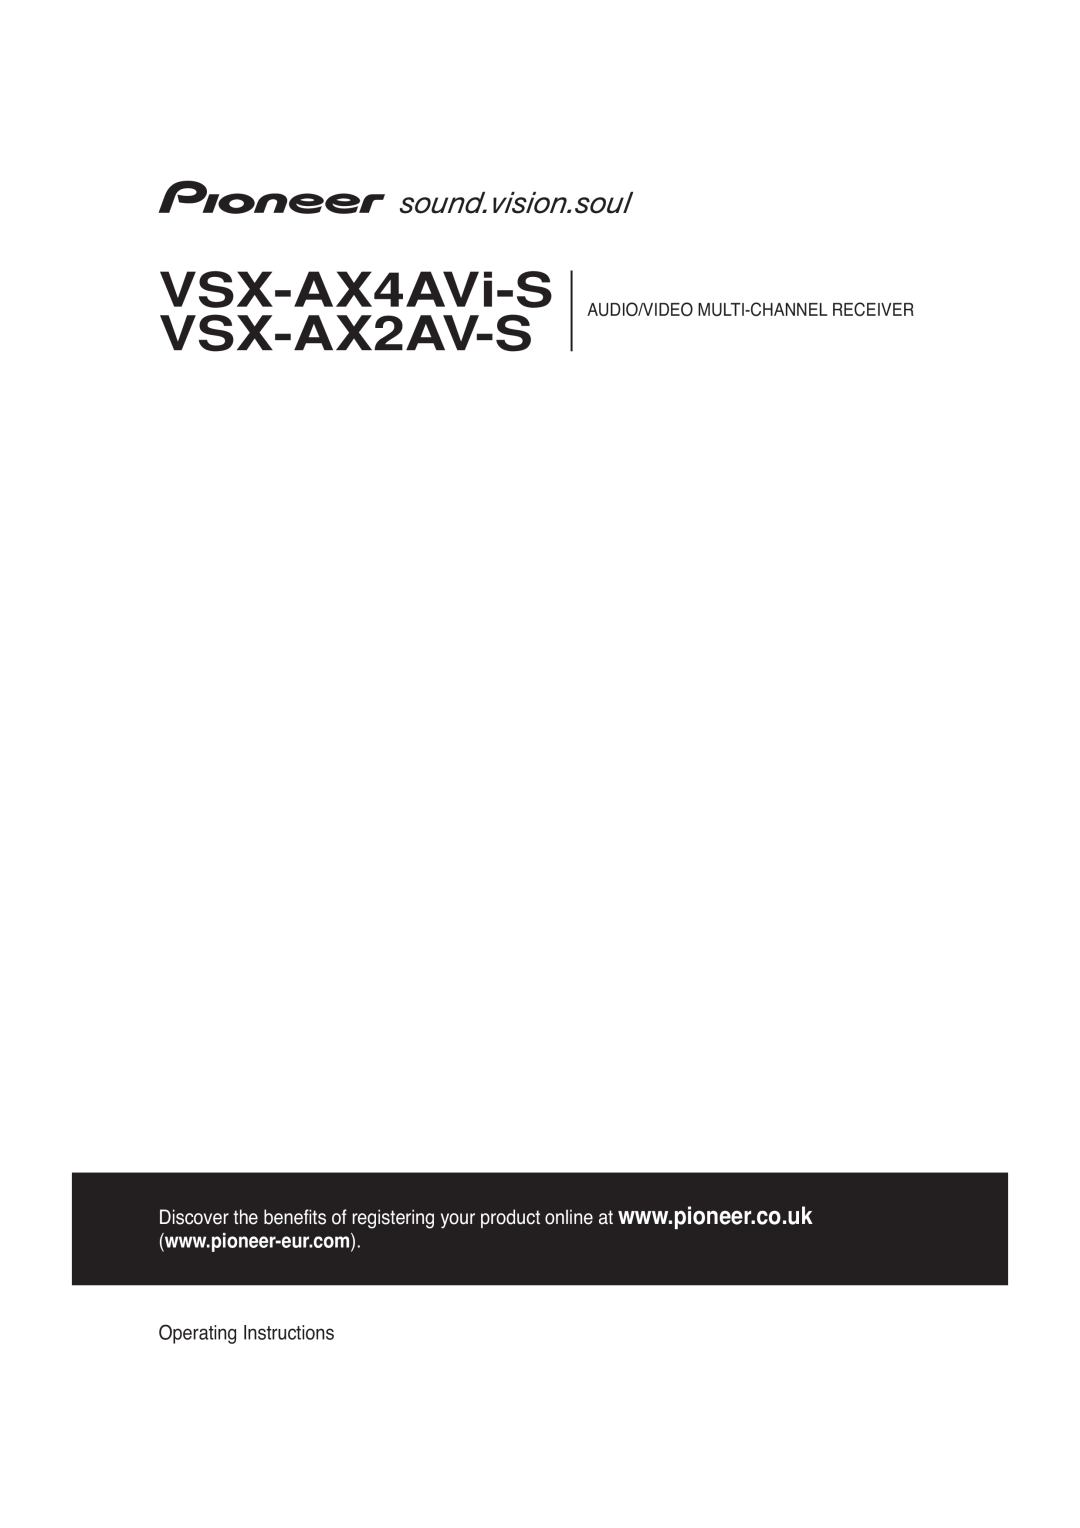 Pioneer manual VSX-AX4AVi-S VSX-AX2AV-S, Operating Instructions, Audio/Video Multi-Channel Receiver 